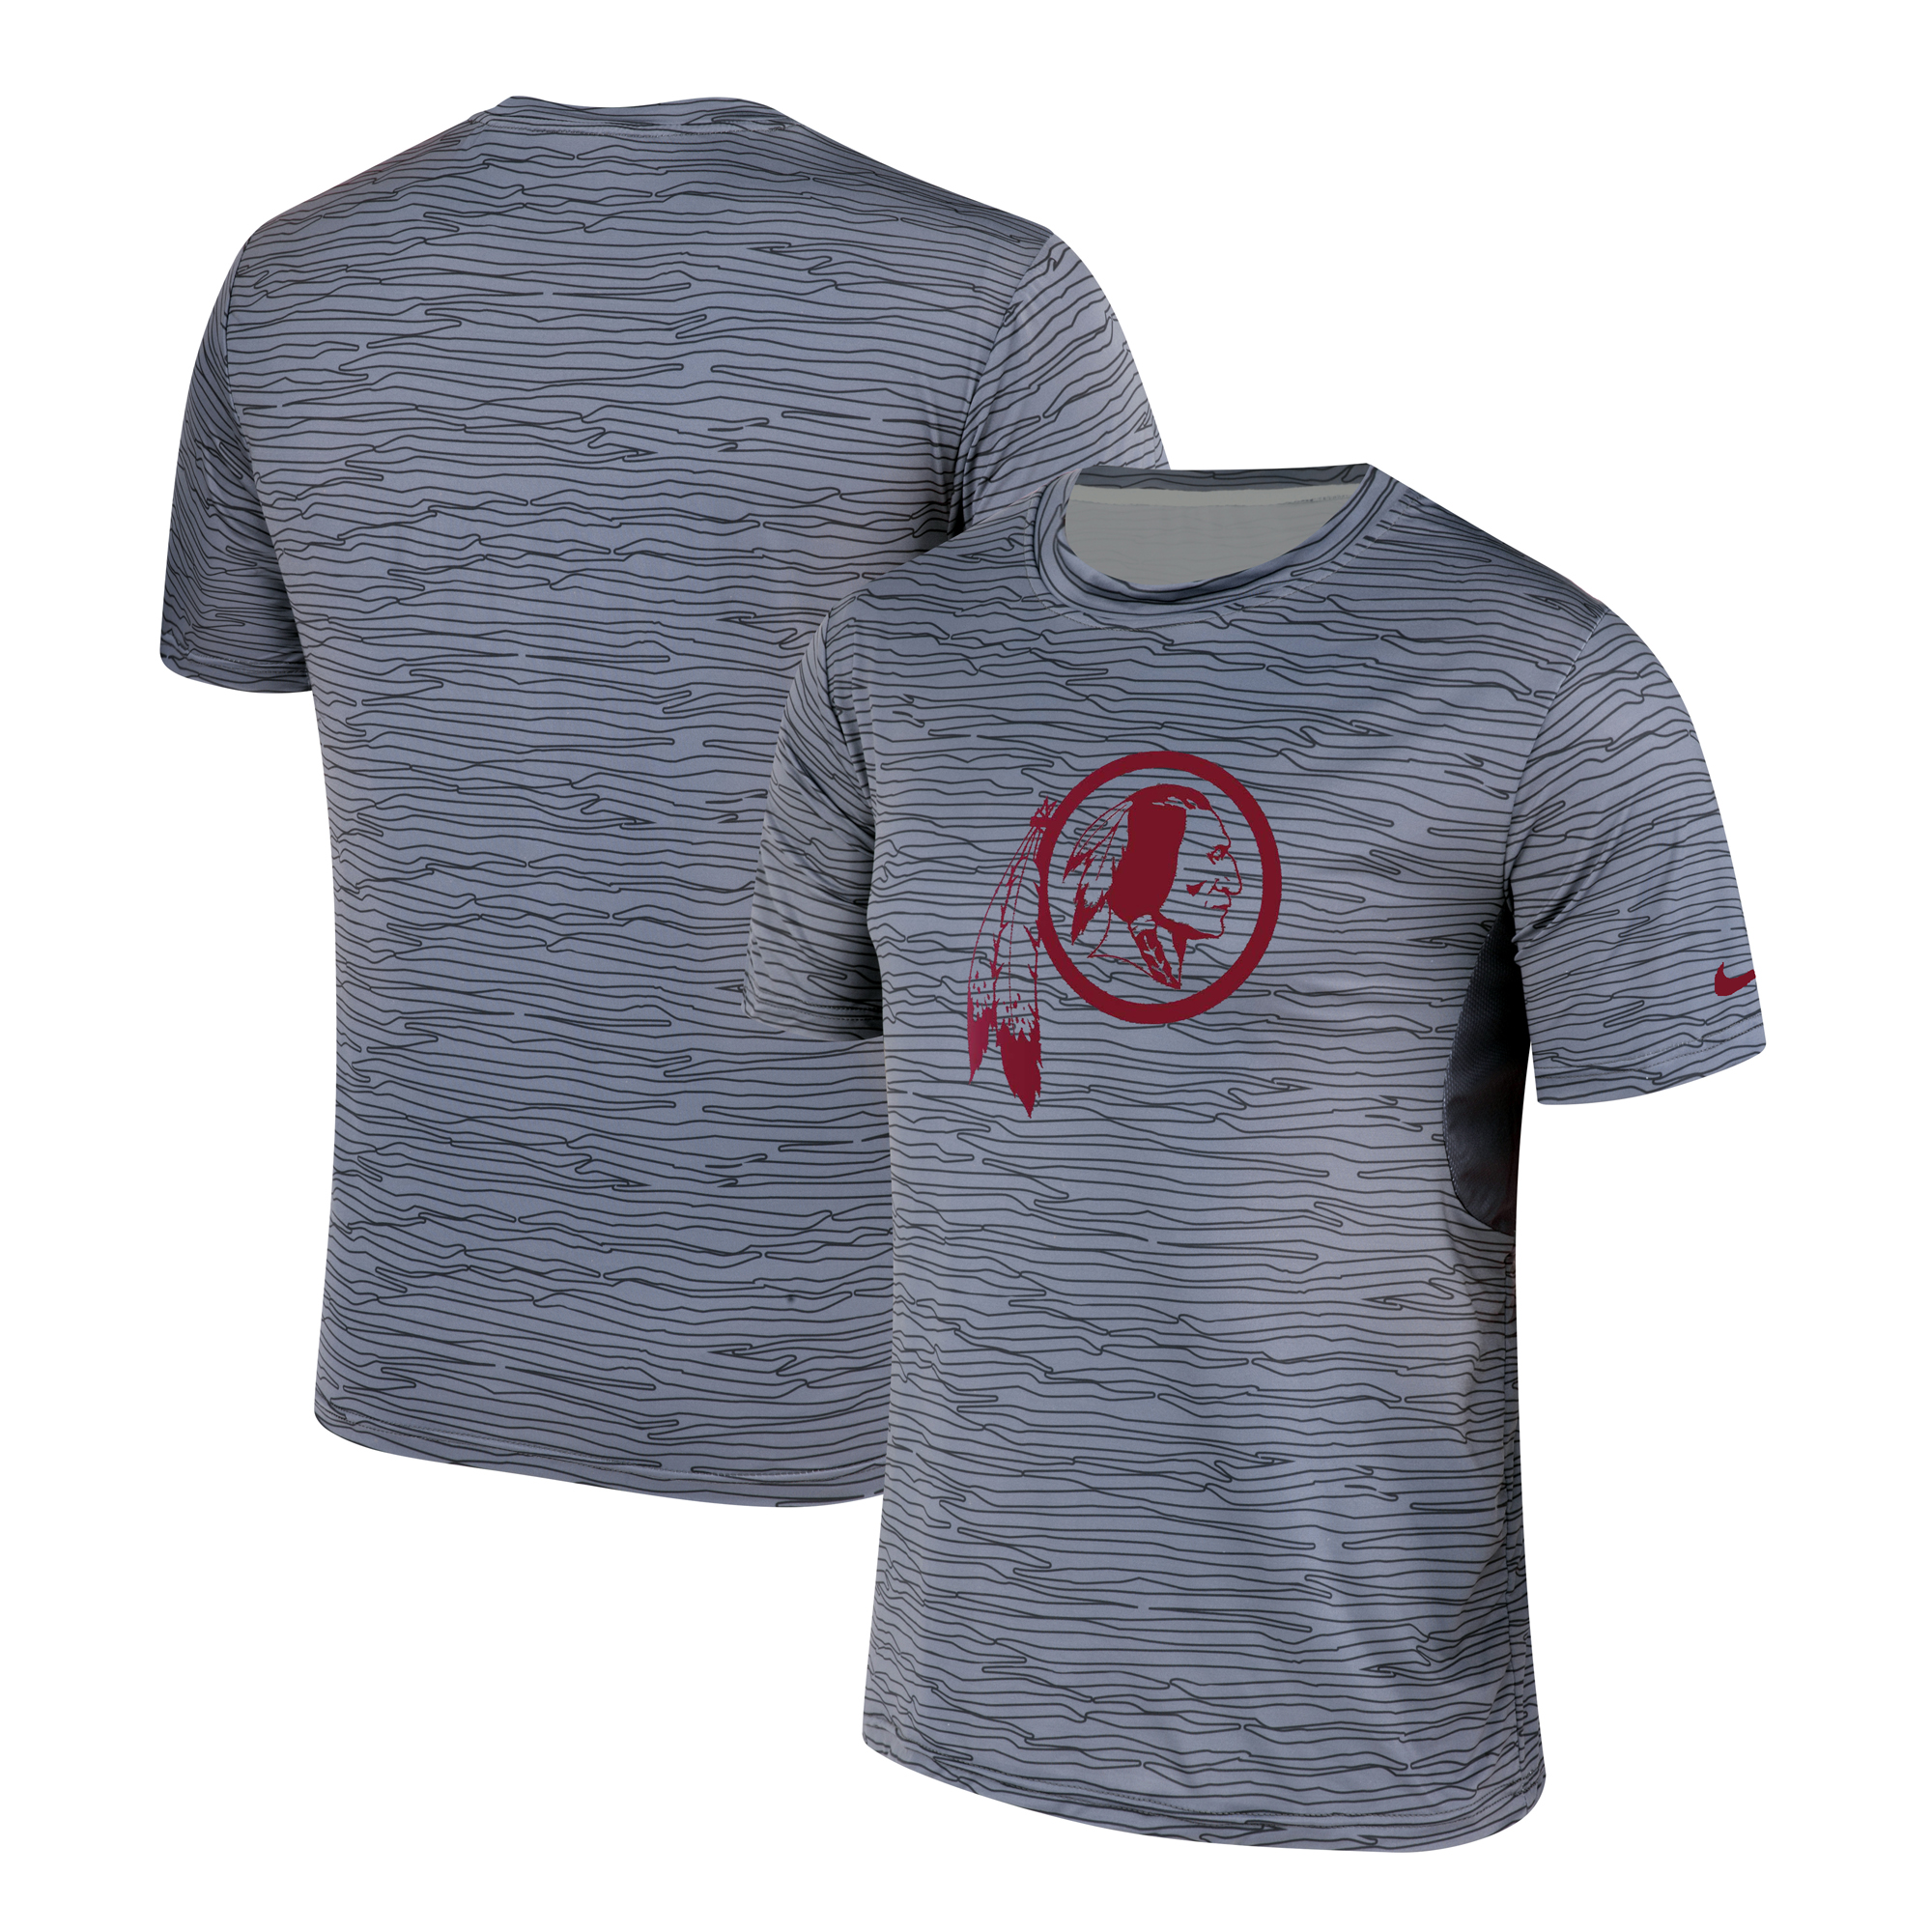 Men's Washington Redskins Nike Gray Black Striped Logo Performance T-Shirt